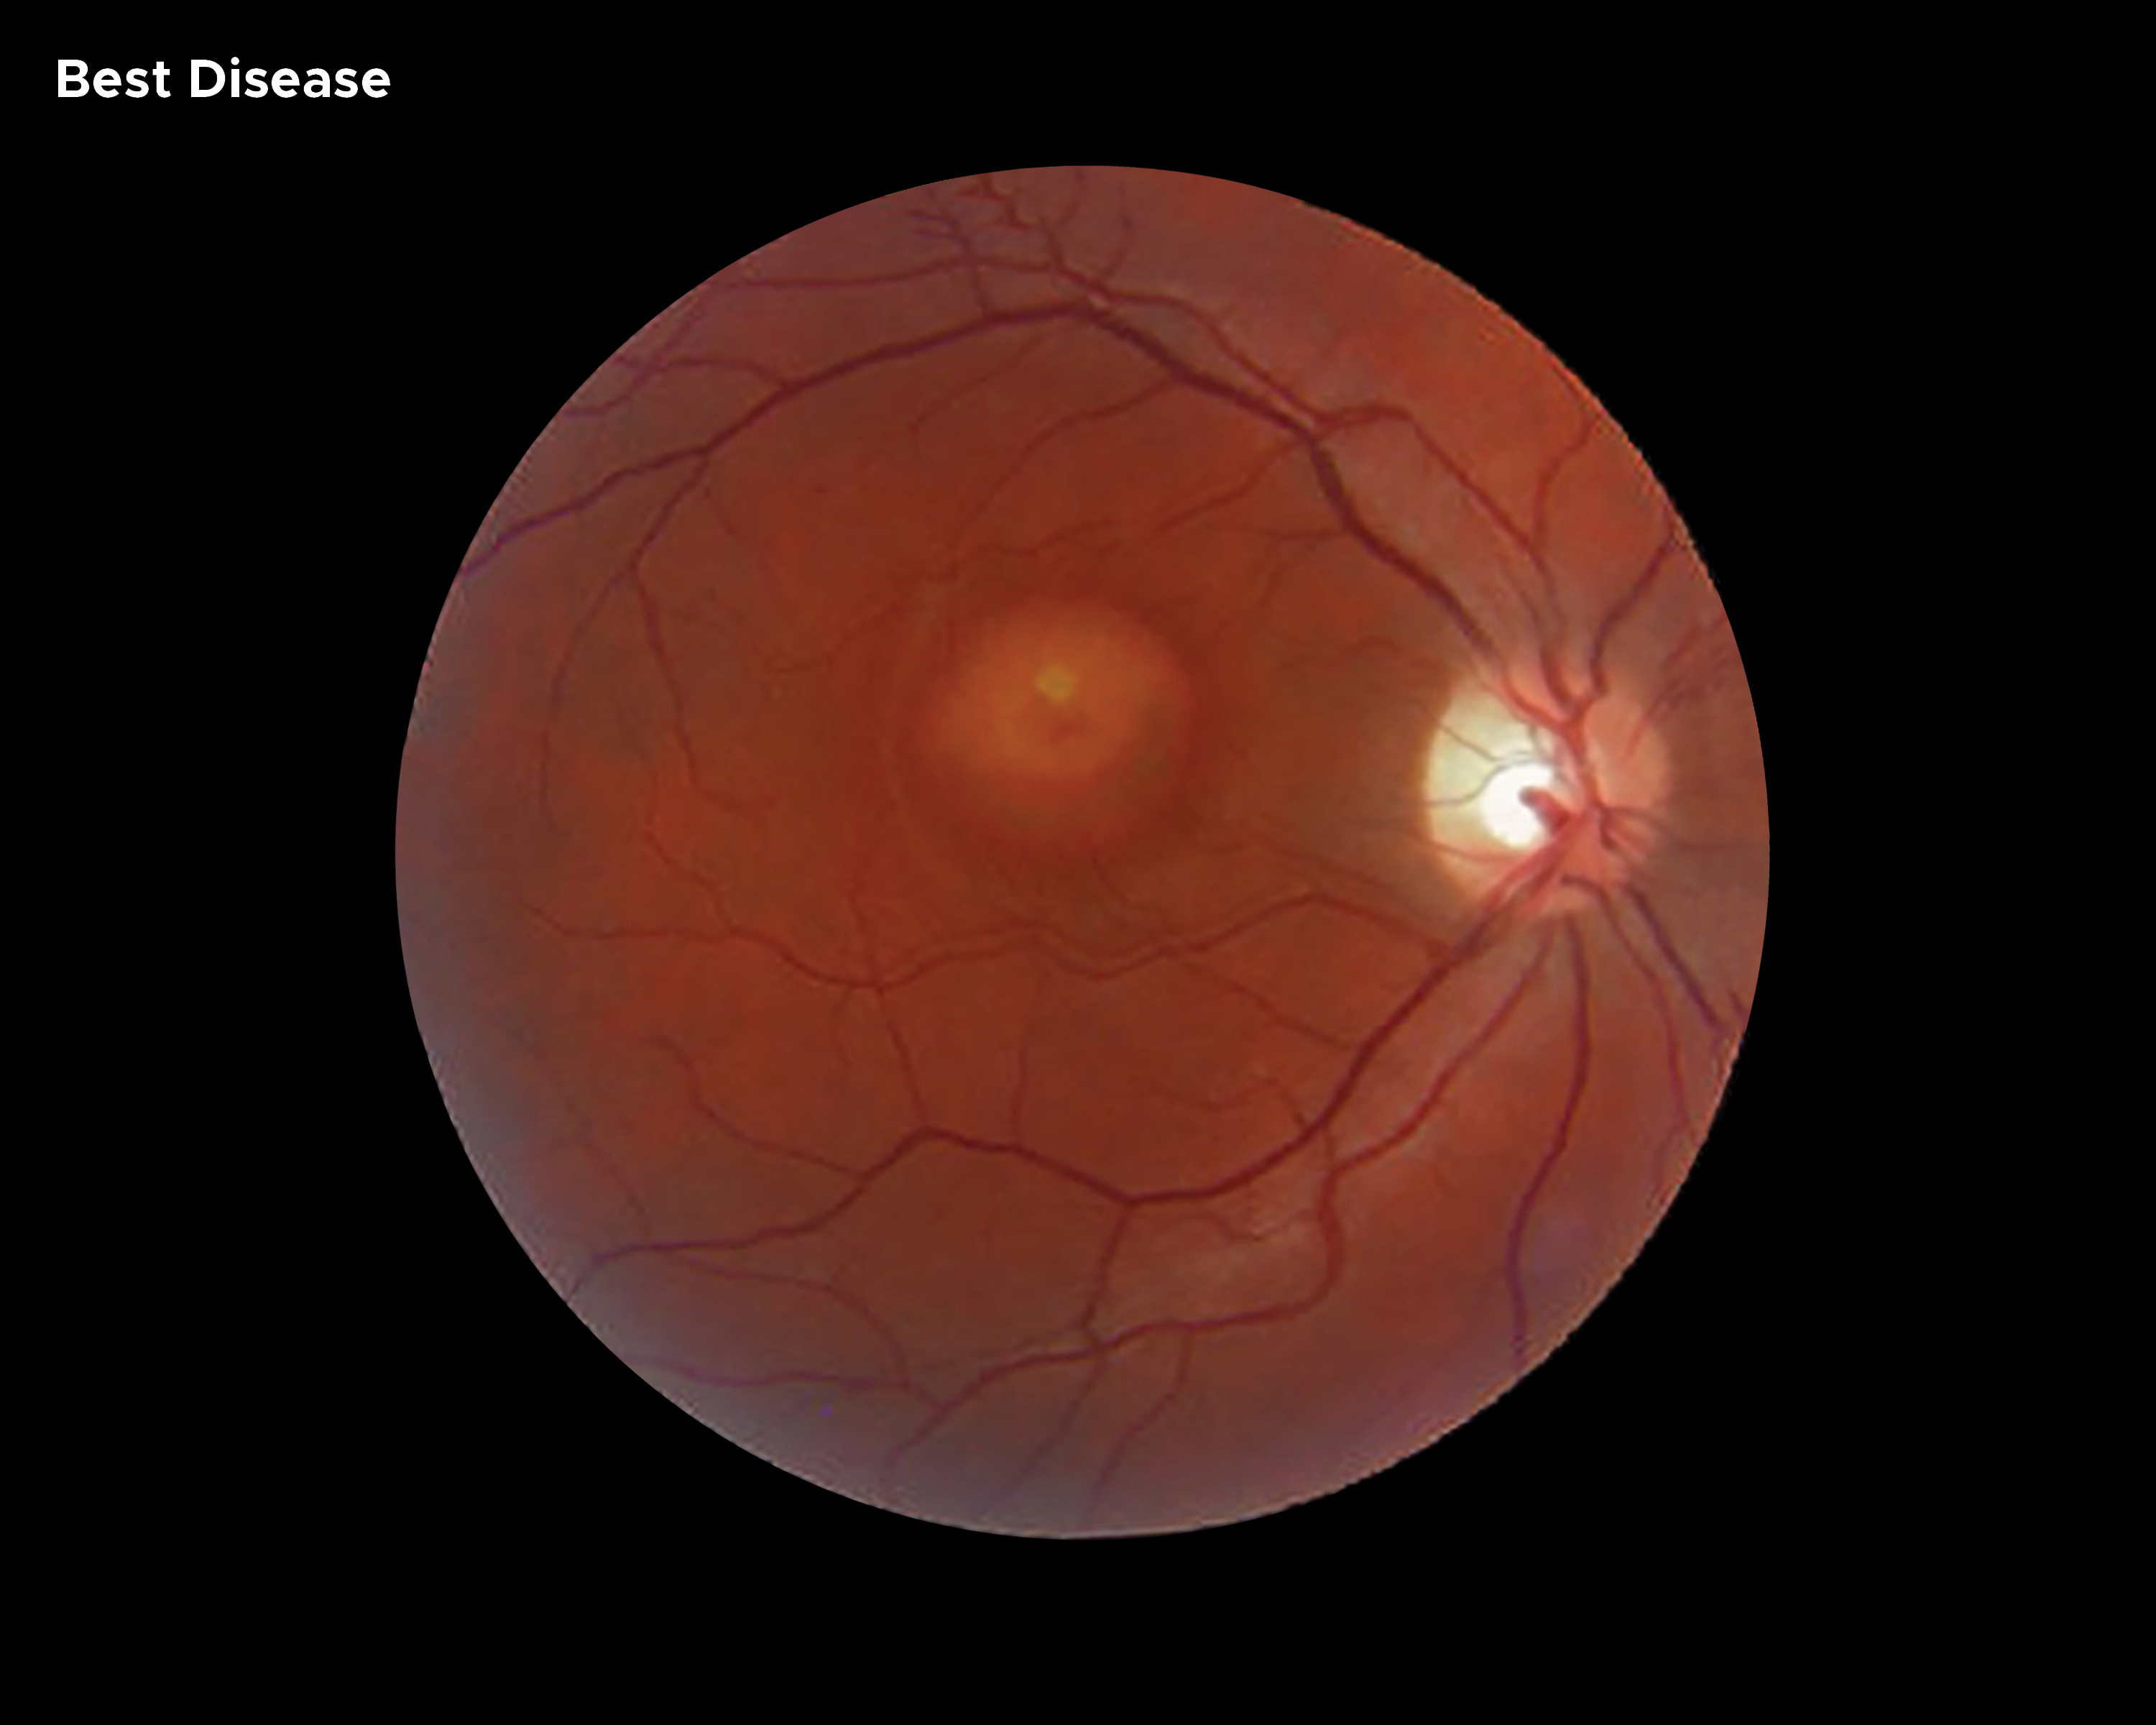 Image of eye with Best Disease